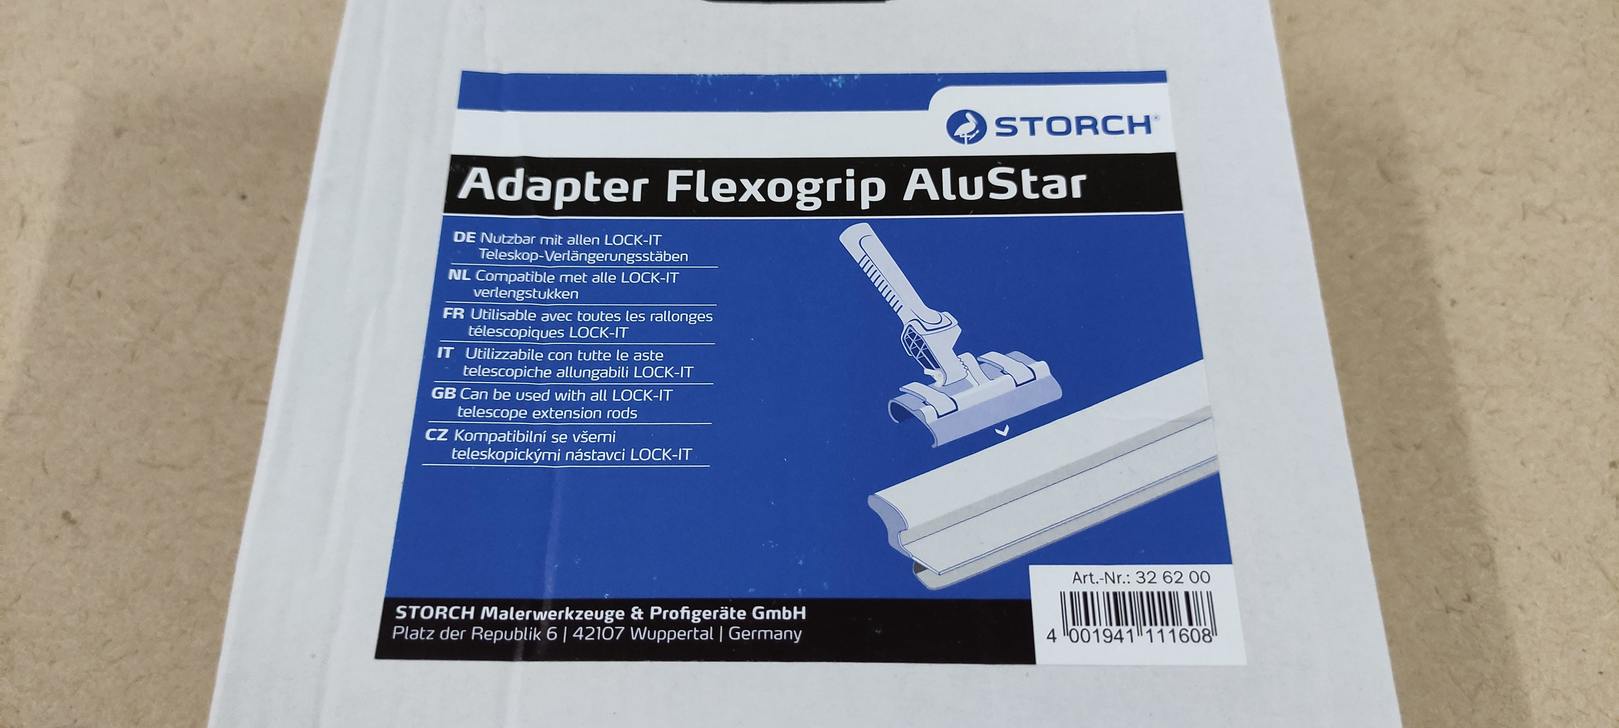 Адаптер для фасадного шпателя Flexogrip Alustar STORCH (326200)